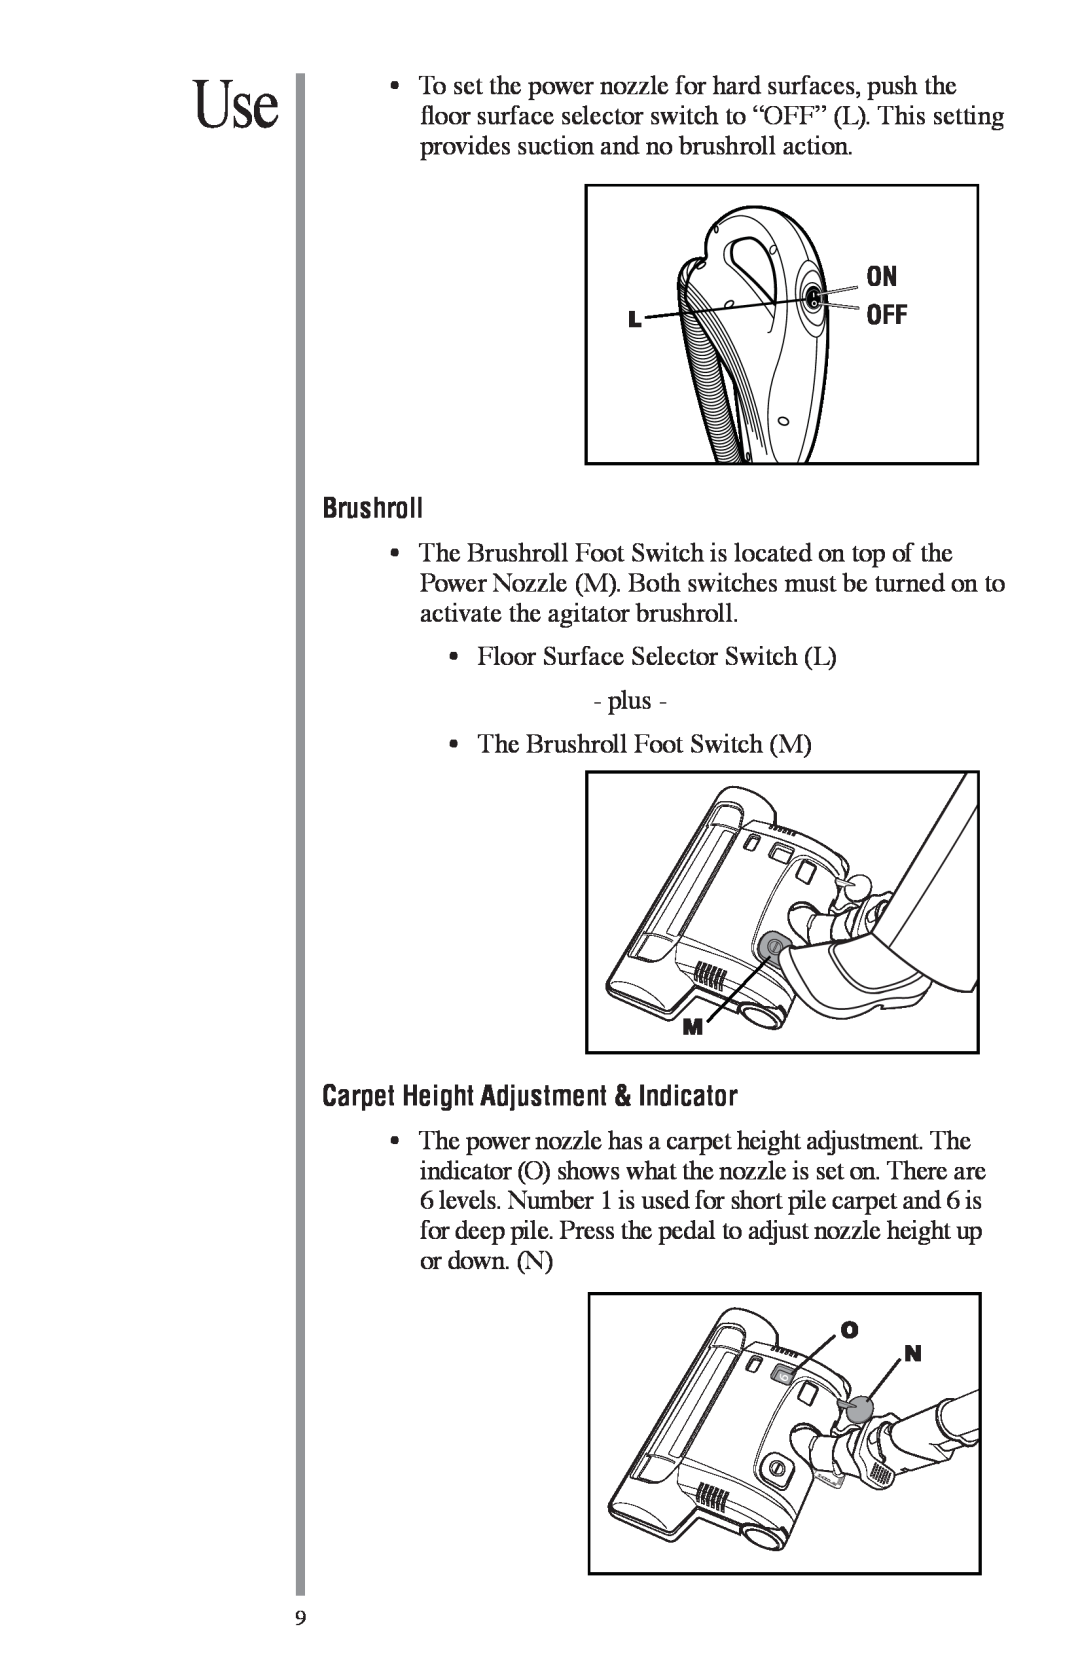 Oreck FC1000 manual Brushroll, Carpet Height Adjustment & Indicator 